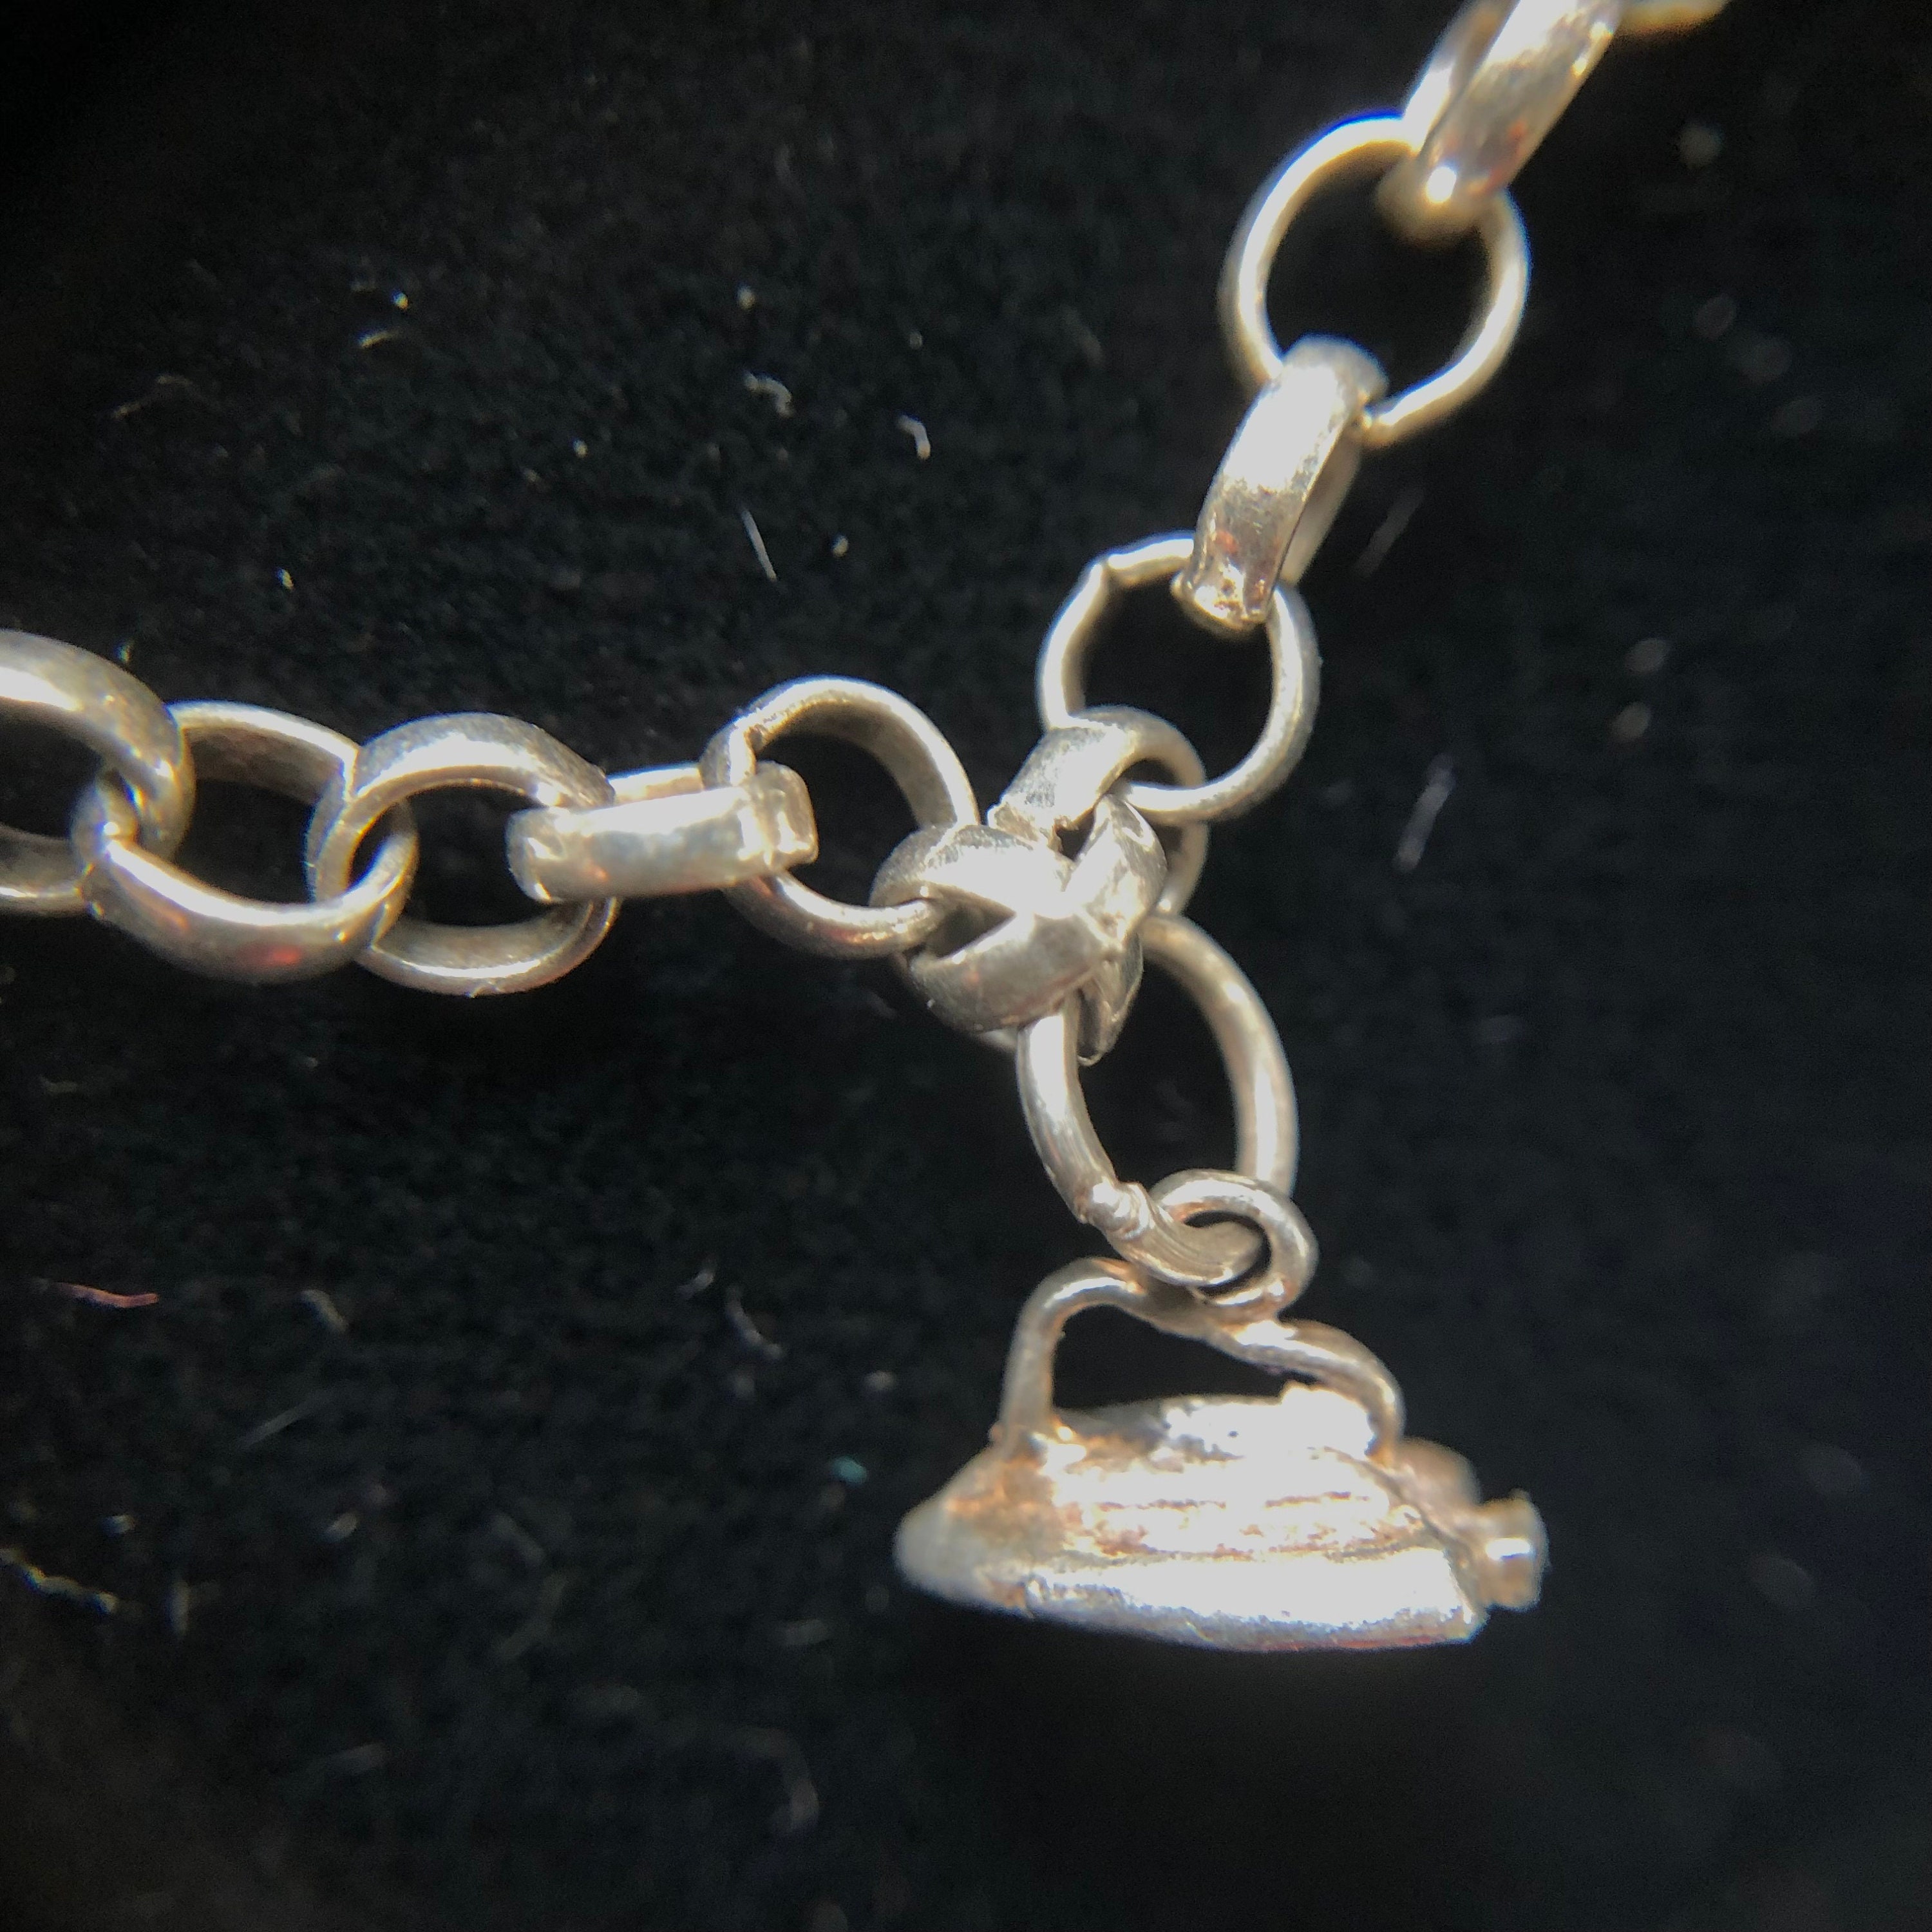 Charm's bracelet ❤️ Price - 75/- each only 😍 Do you like it? Dm